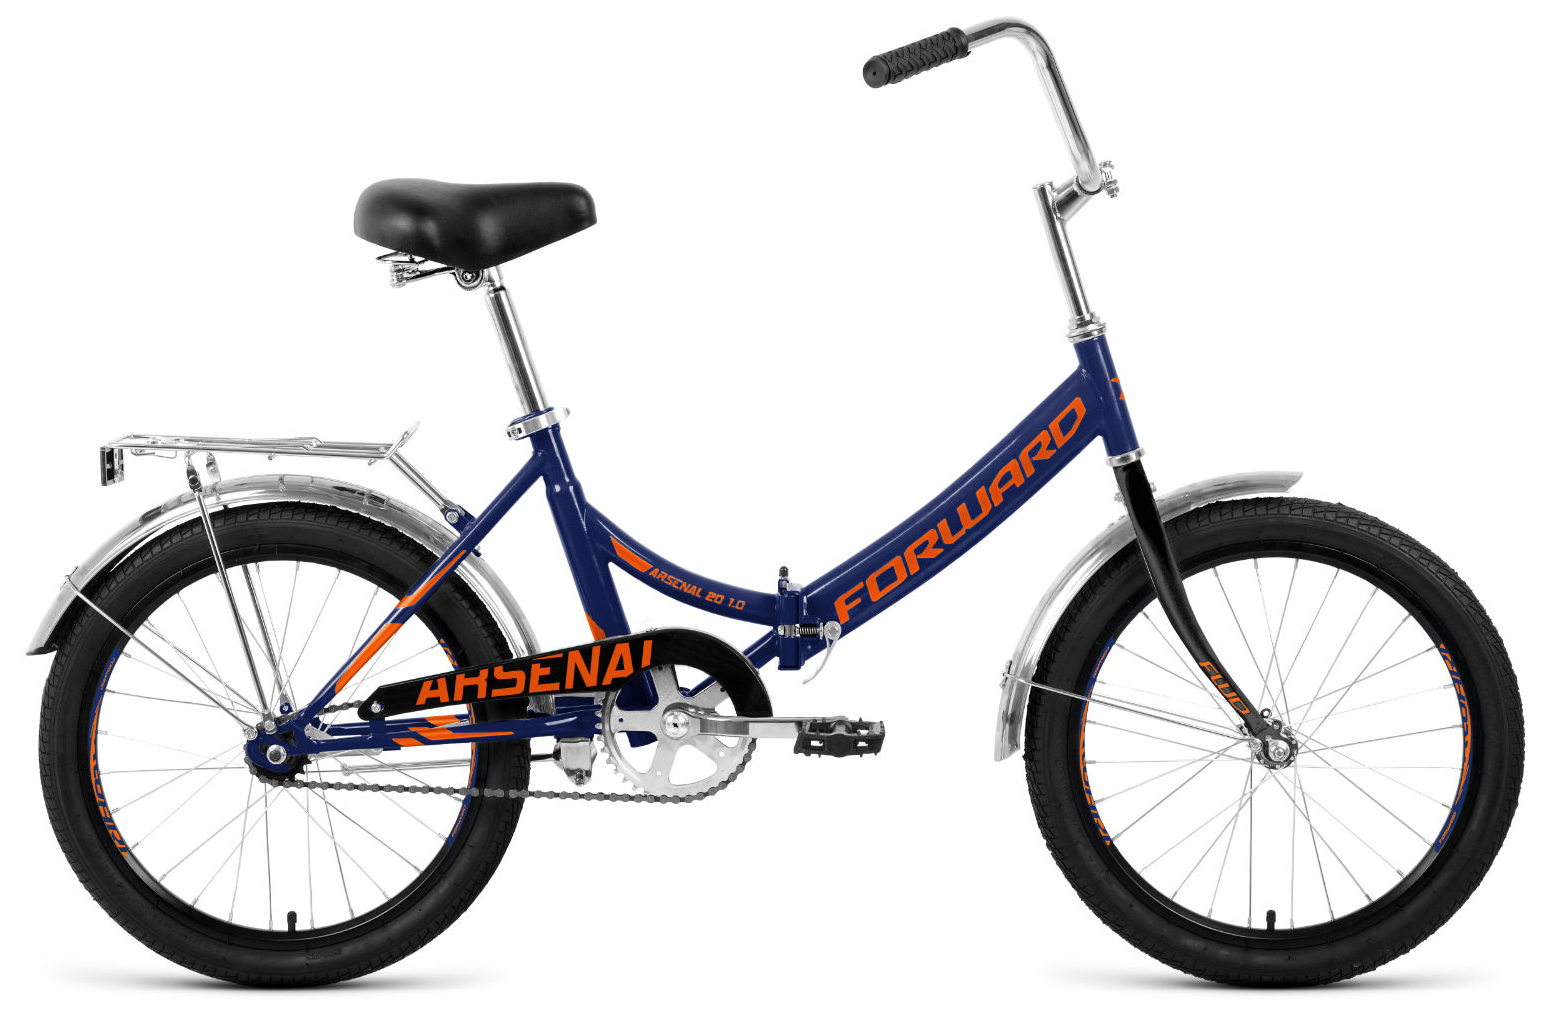  Велосипед Forward Arsenal 20 1.0 (2021) 2021